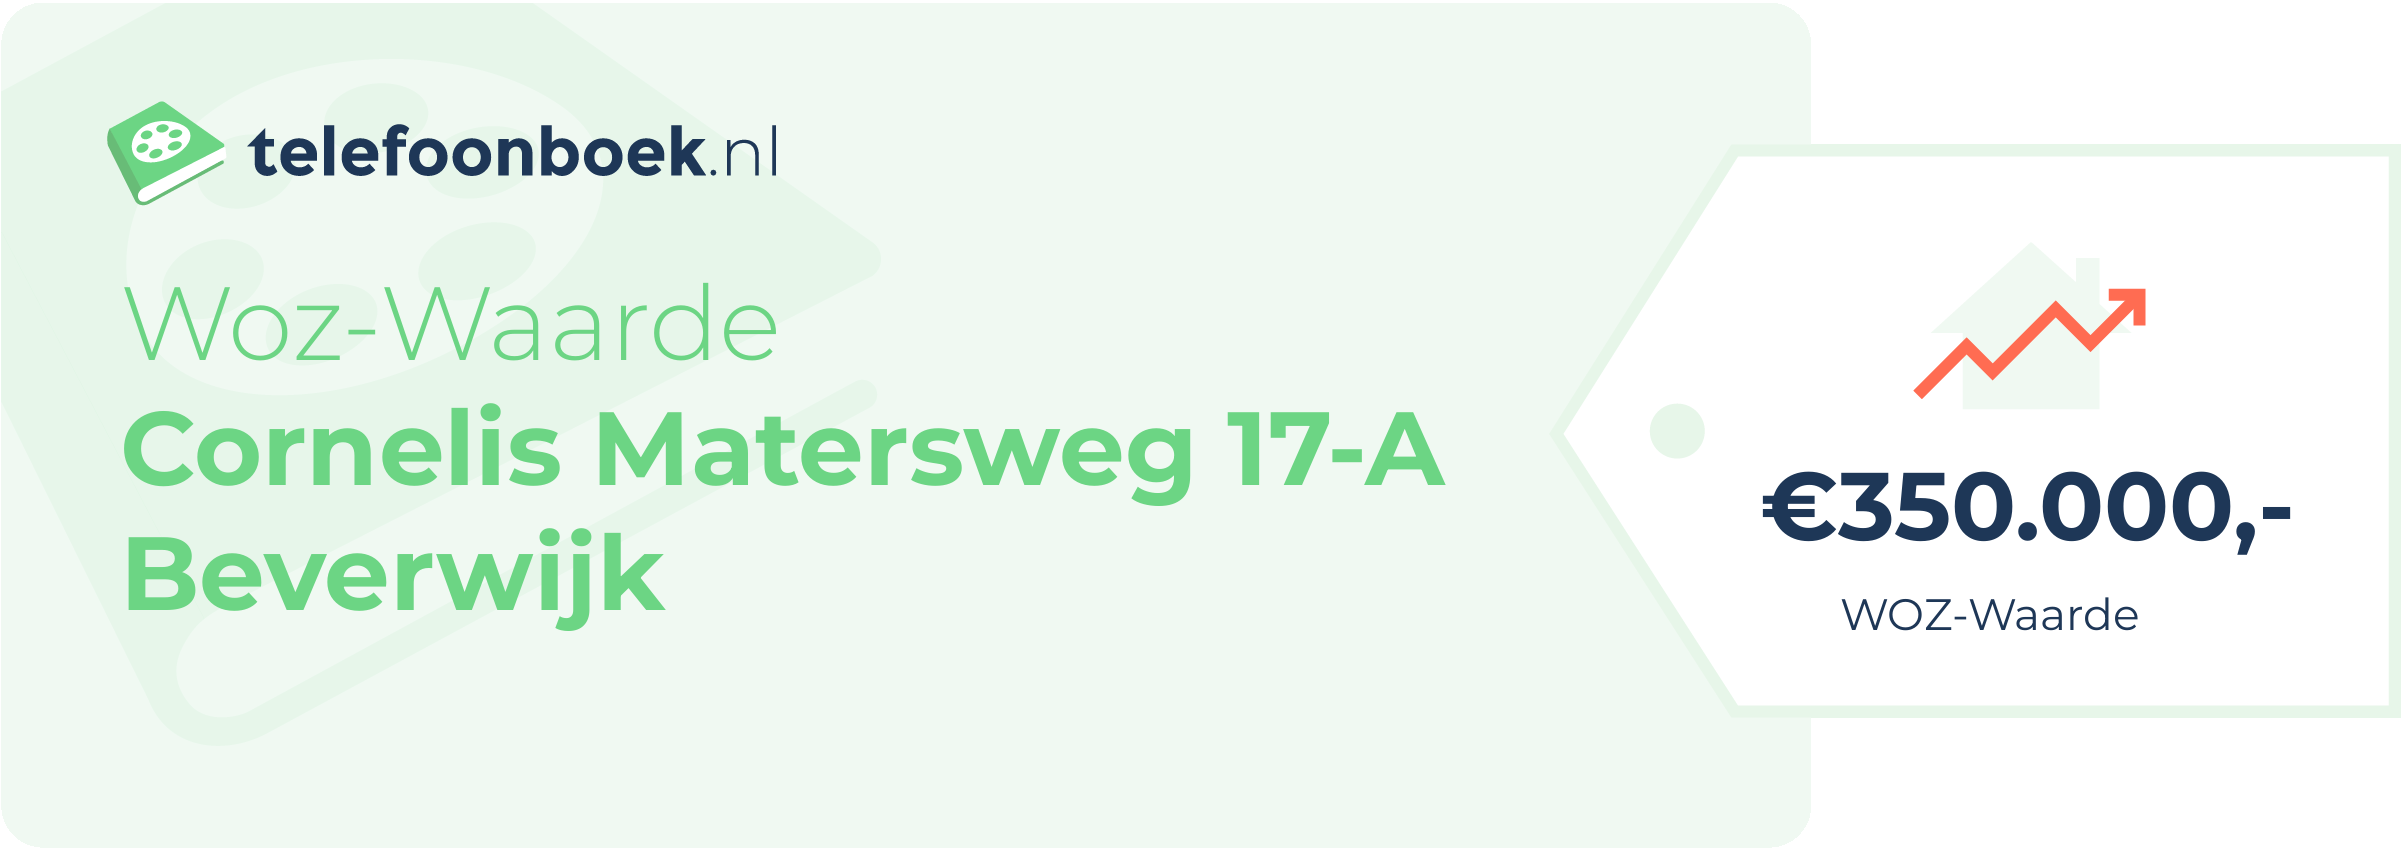 WOZ-waarde Cornelis Matersweg 17-A Beverwijk